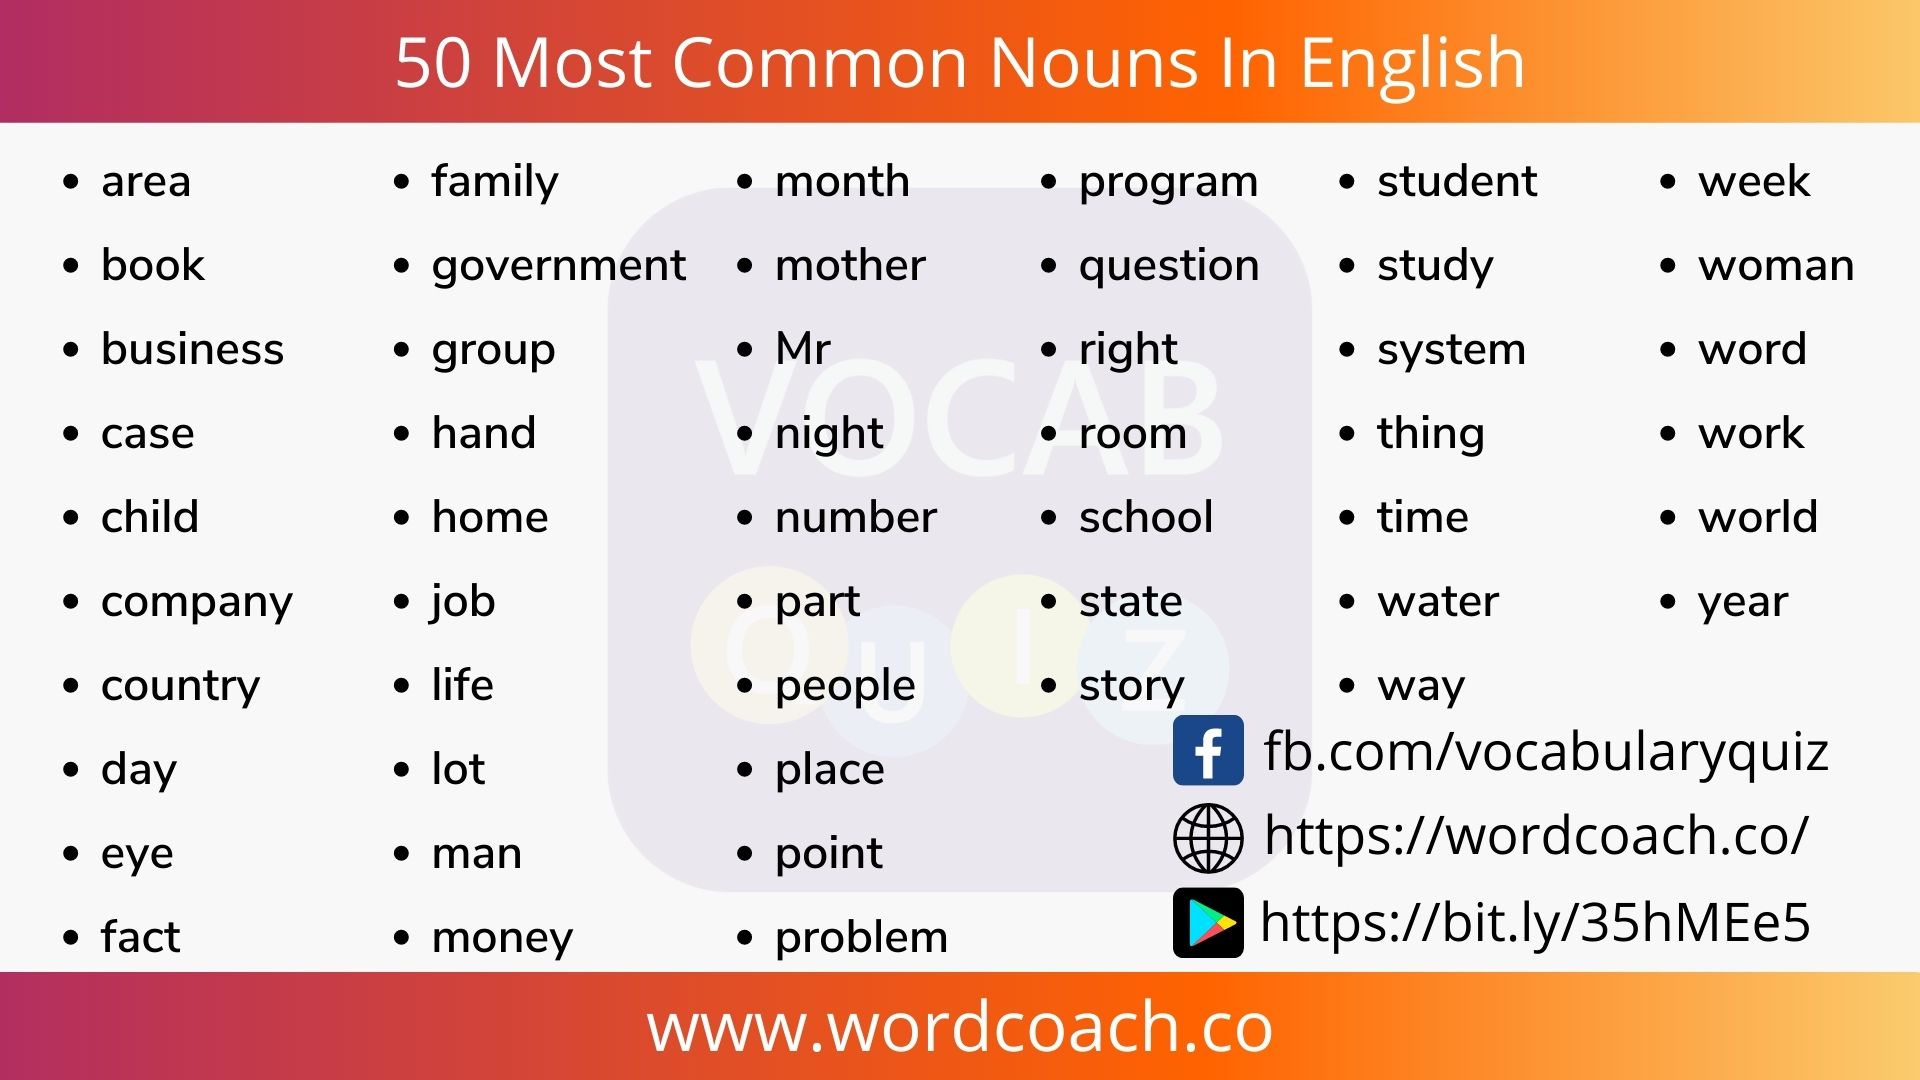 50-most-common-nouns-in-english-vocab-quiz